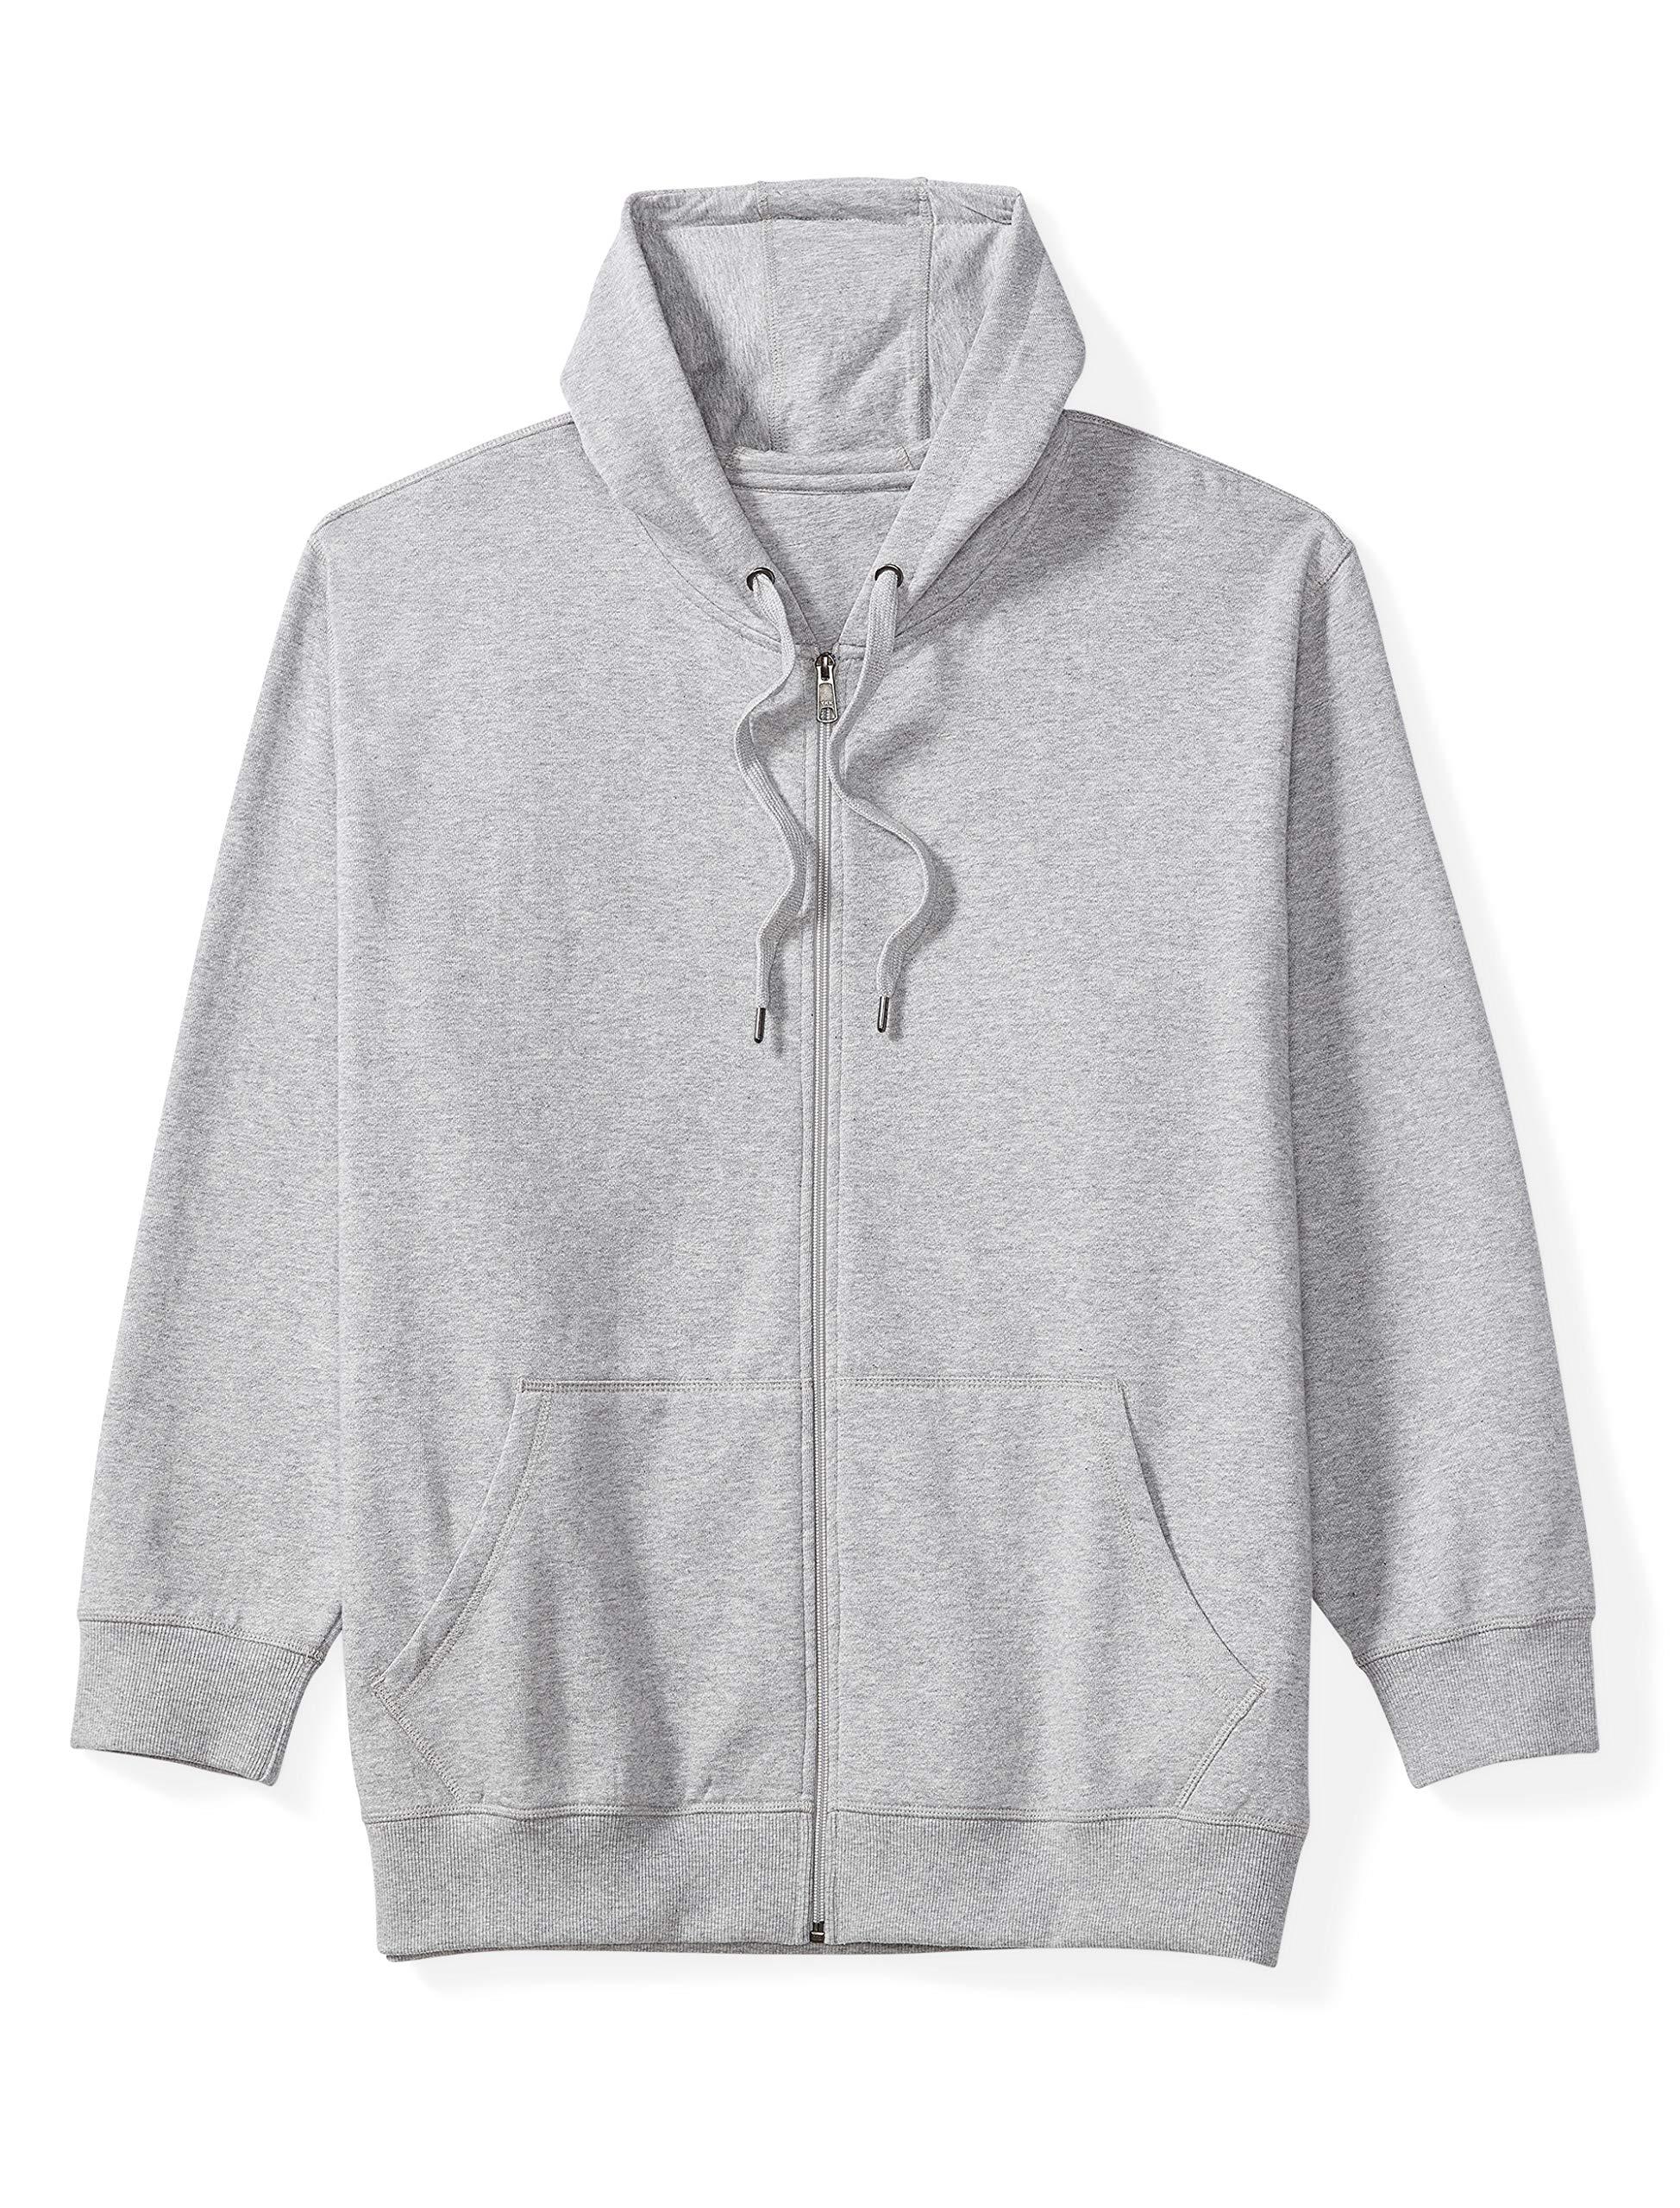 Essentials Mens Big /& Tall Full-Zip Hooded Fleece Sweatshirt fit by DXL